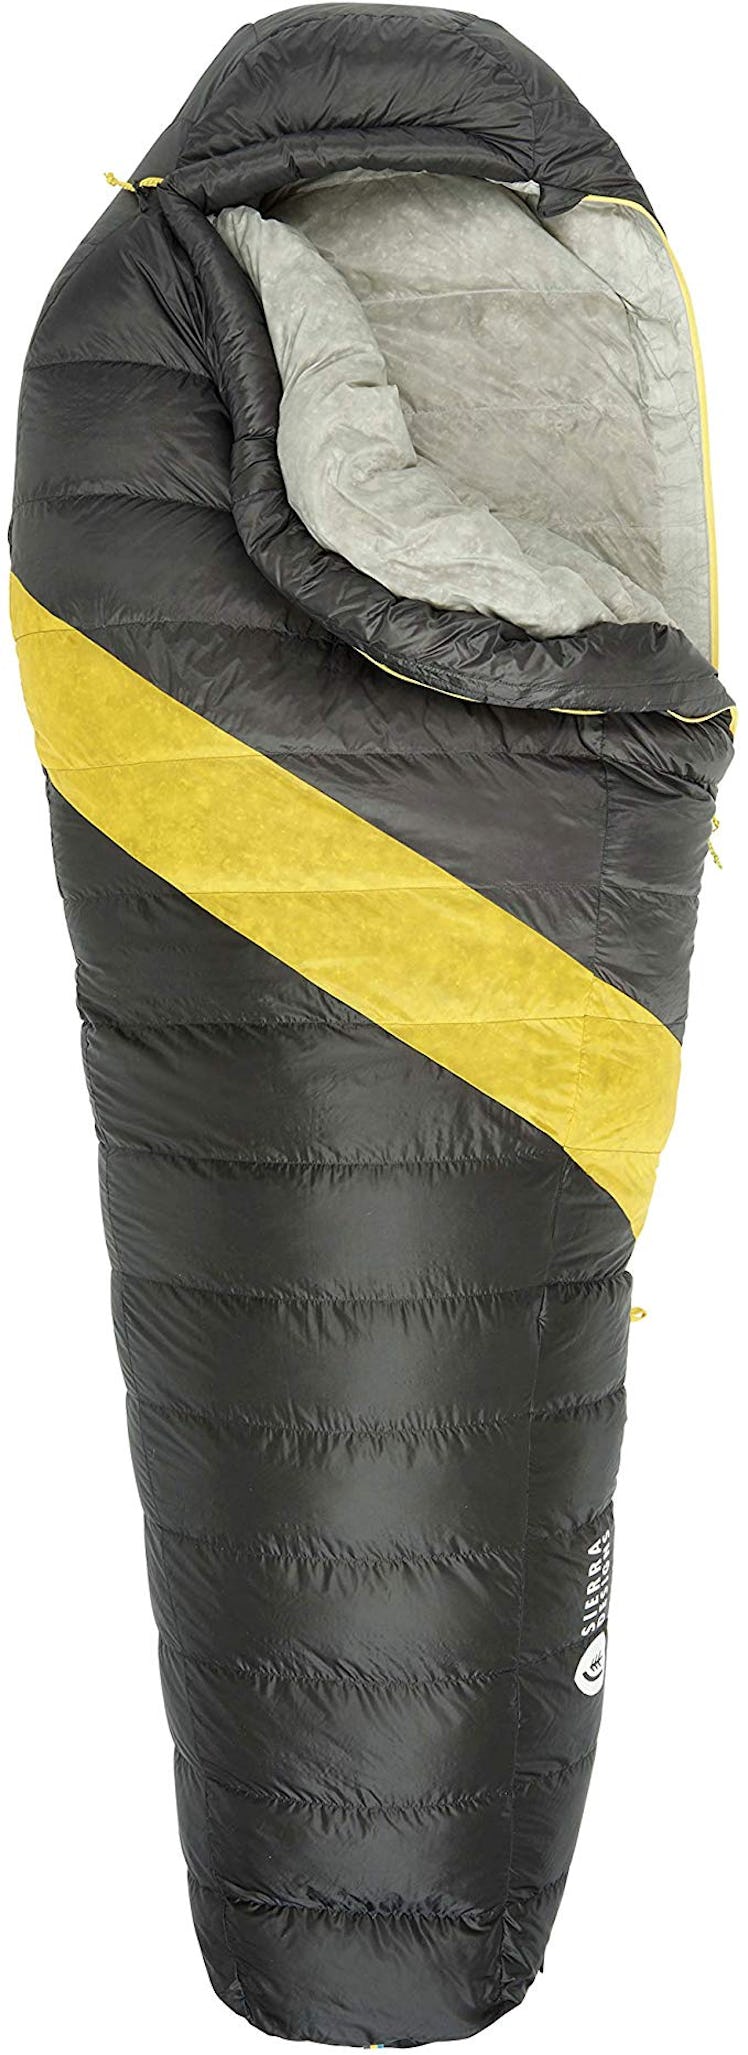 Sierra Designs Nitro 0 Degree Ultralight DriDown Sleeping Bag 